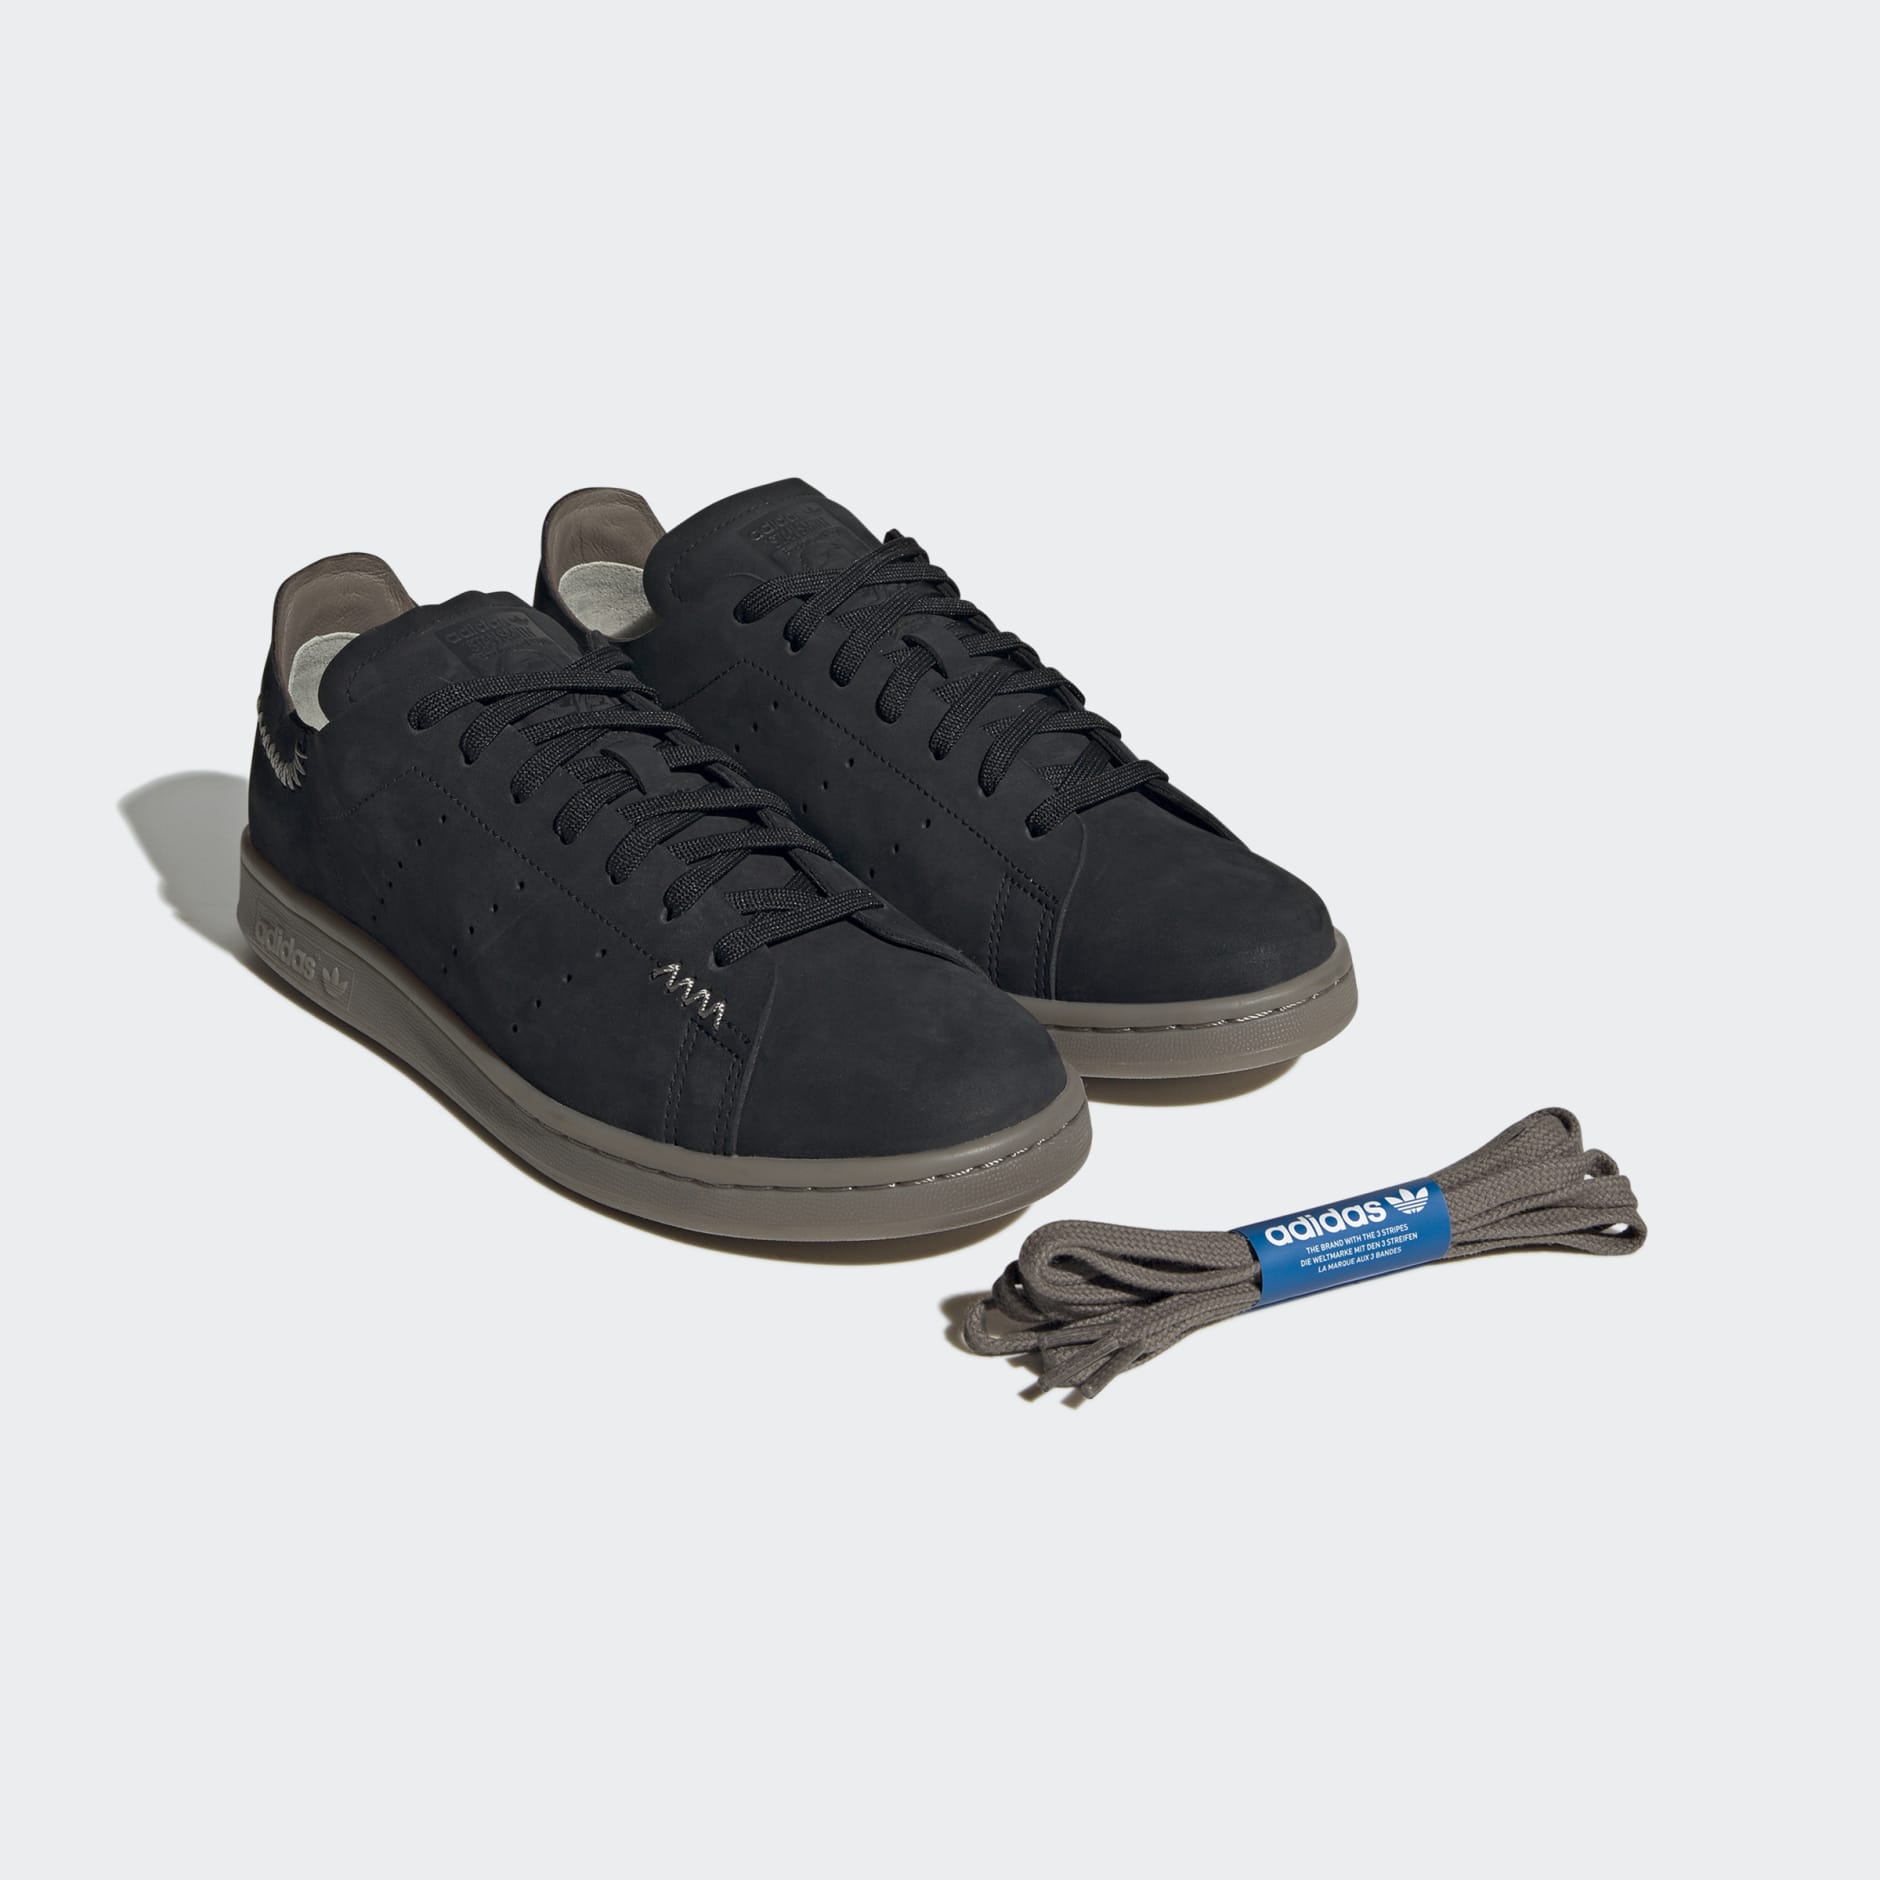 Originals Shoes - Stan Smith Recon Shoes - Black | adidas Egypt